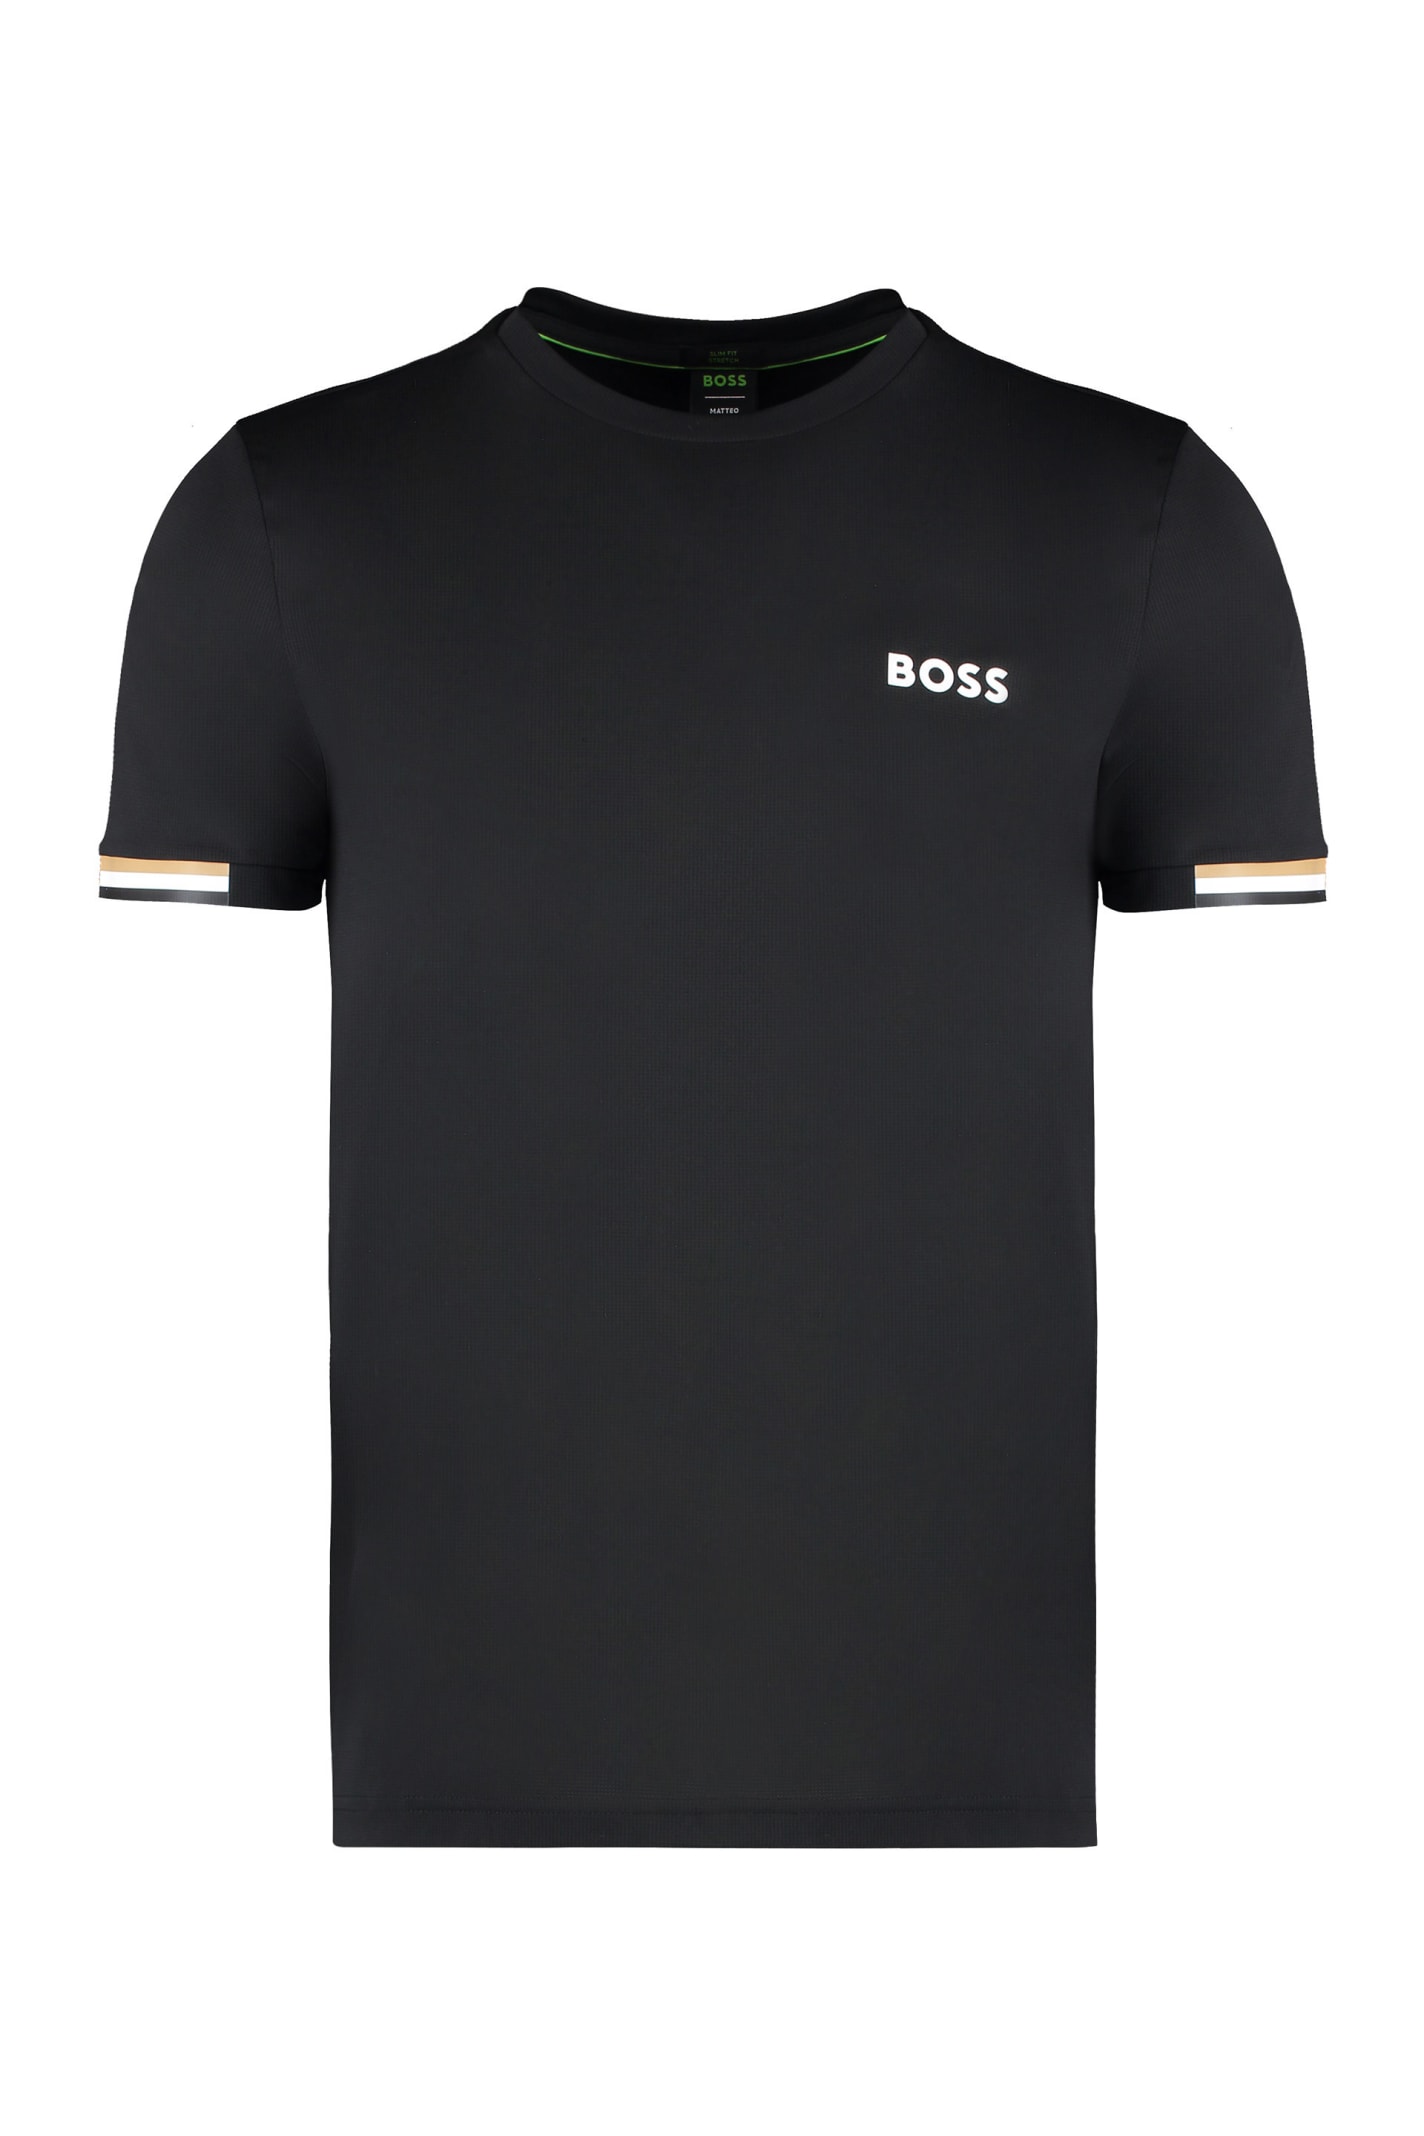 Boss X Matteo Berrettini - Techno Fabric T-shirt